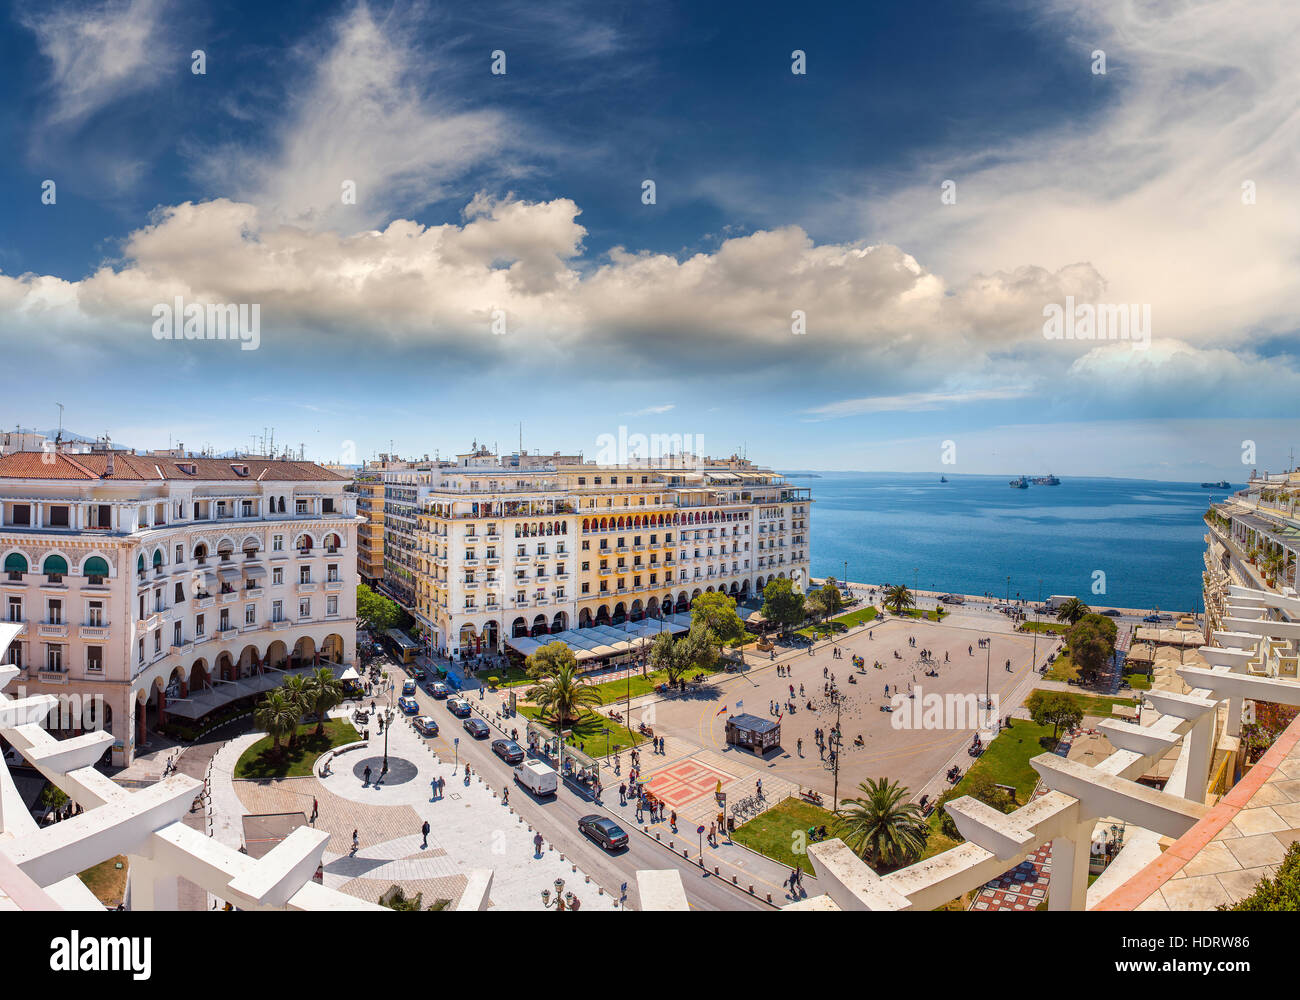 Aristotelous Square Under the Wonderful Blue Sky of Greece, at Thessaloniki city Stock Photo